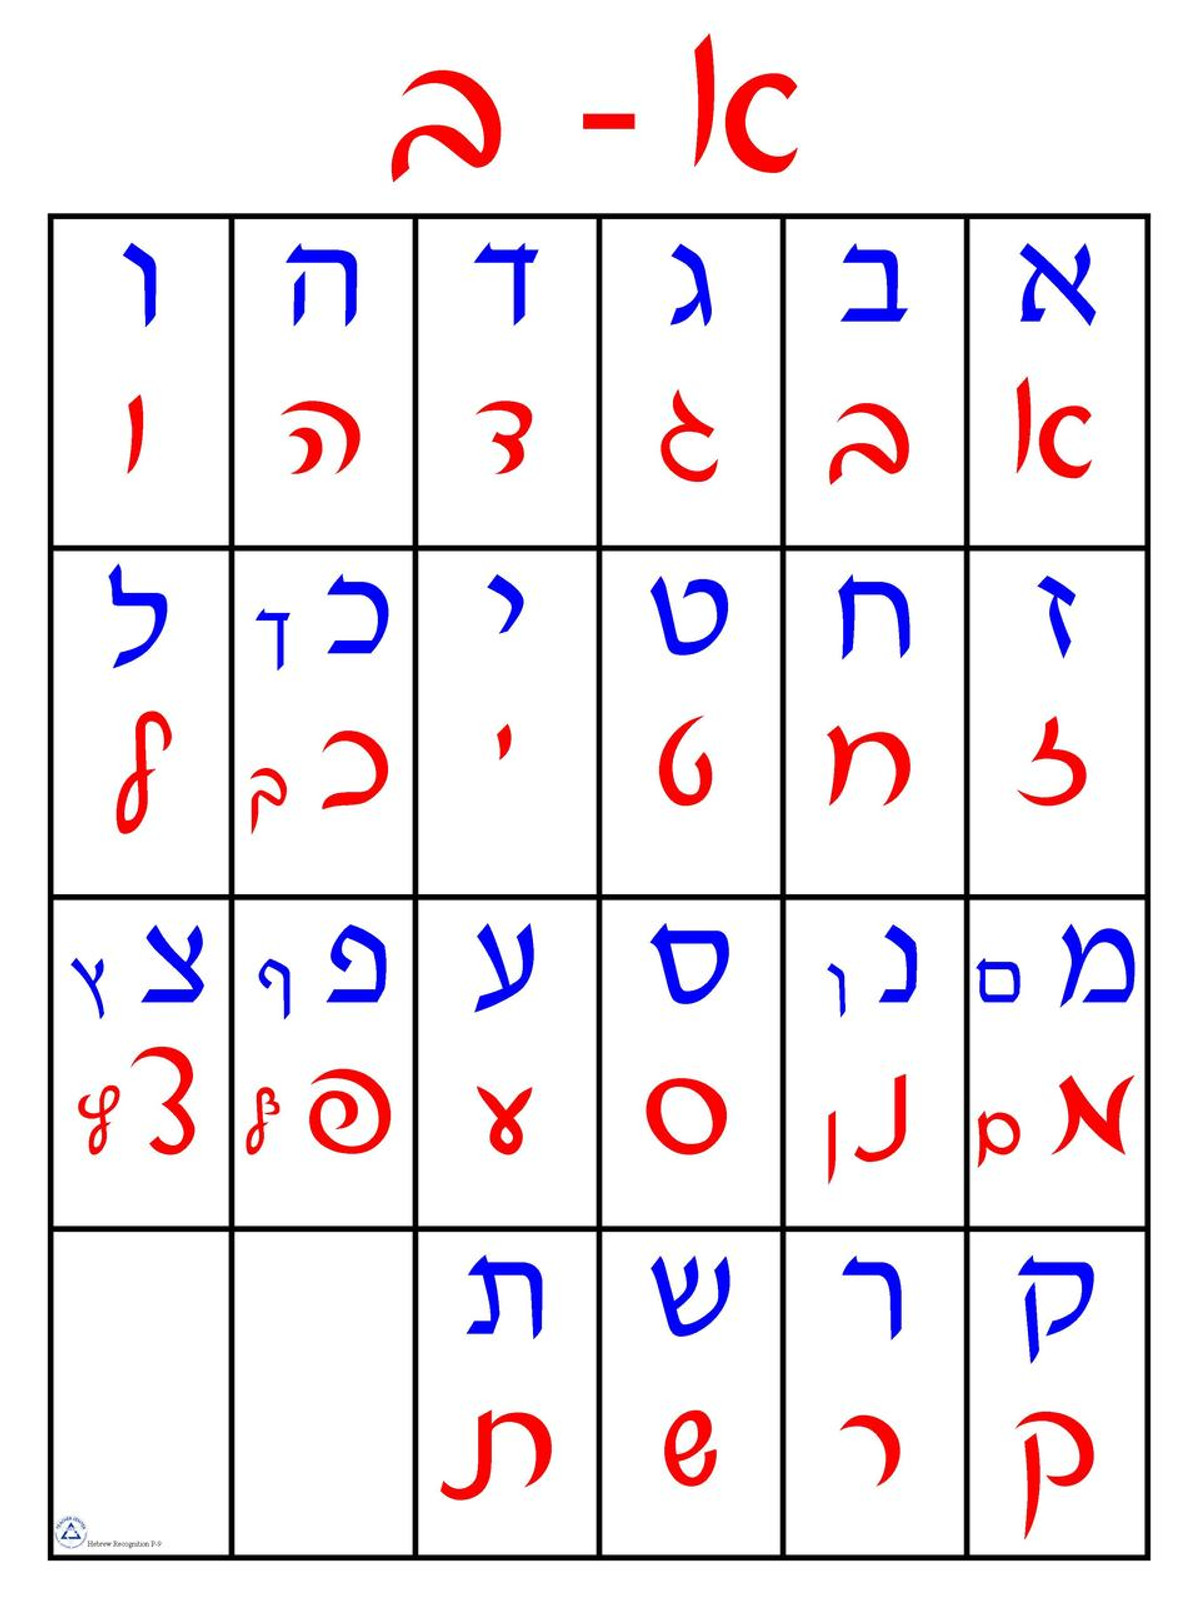 Aleph Bet Chart